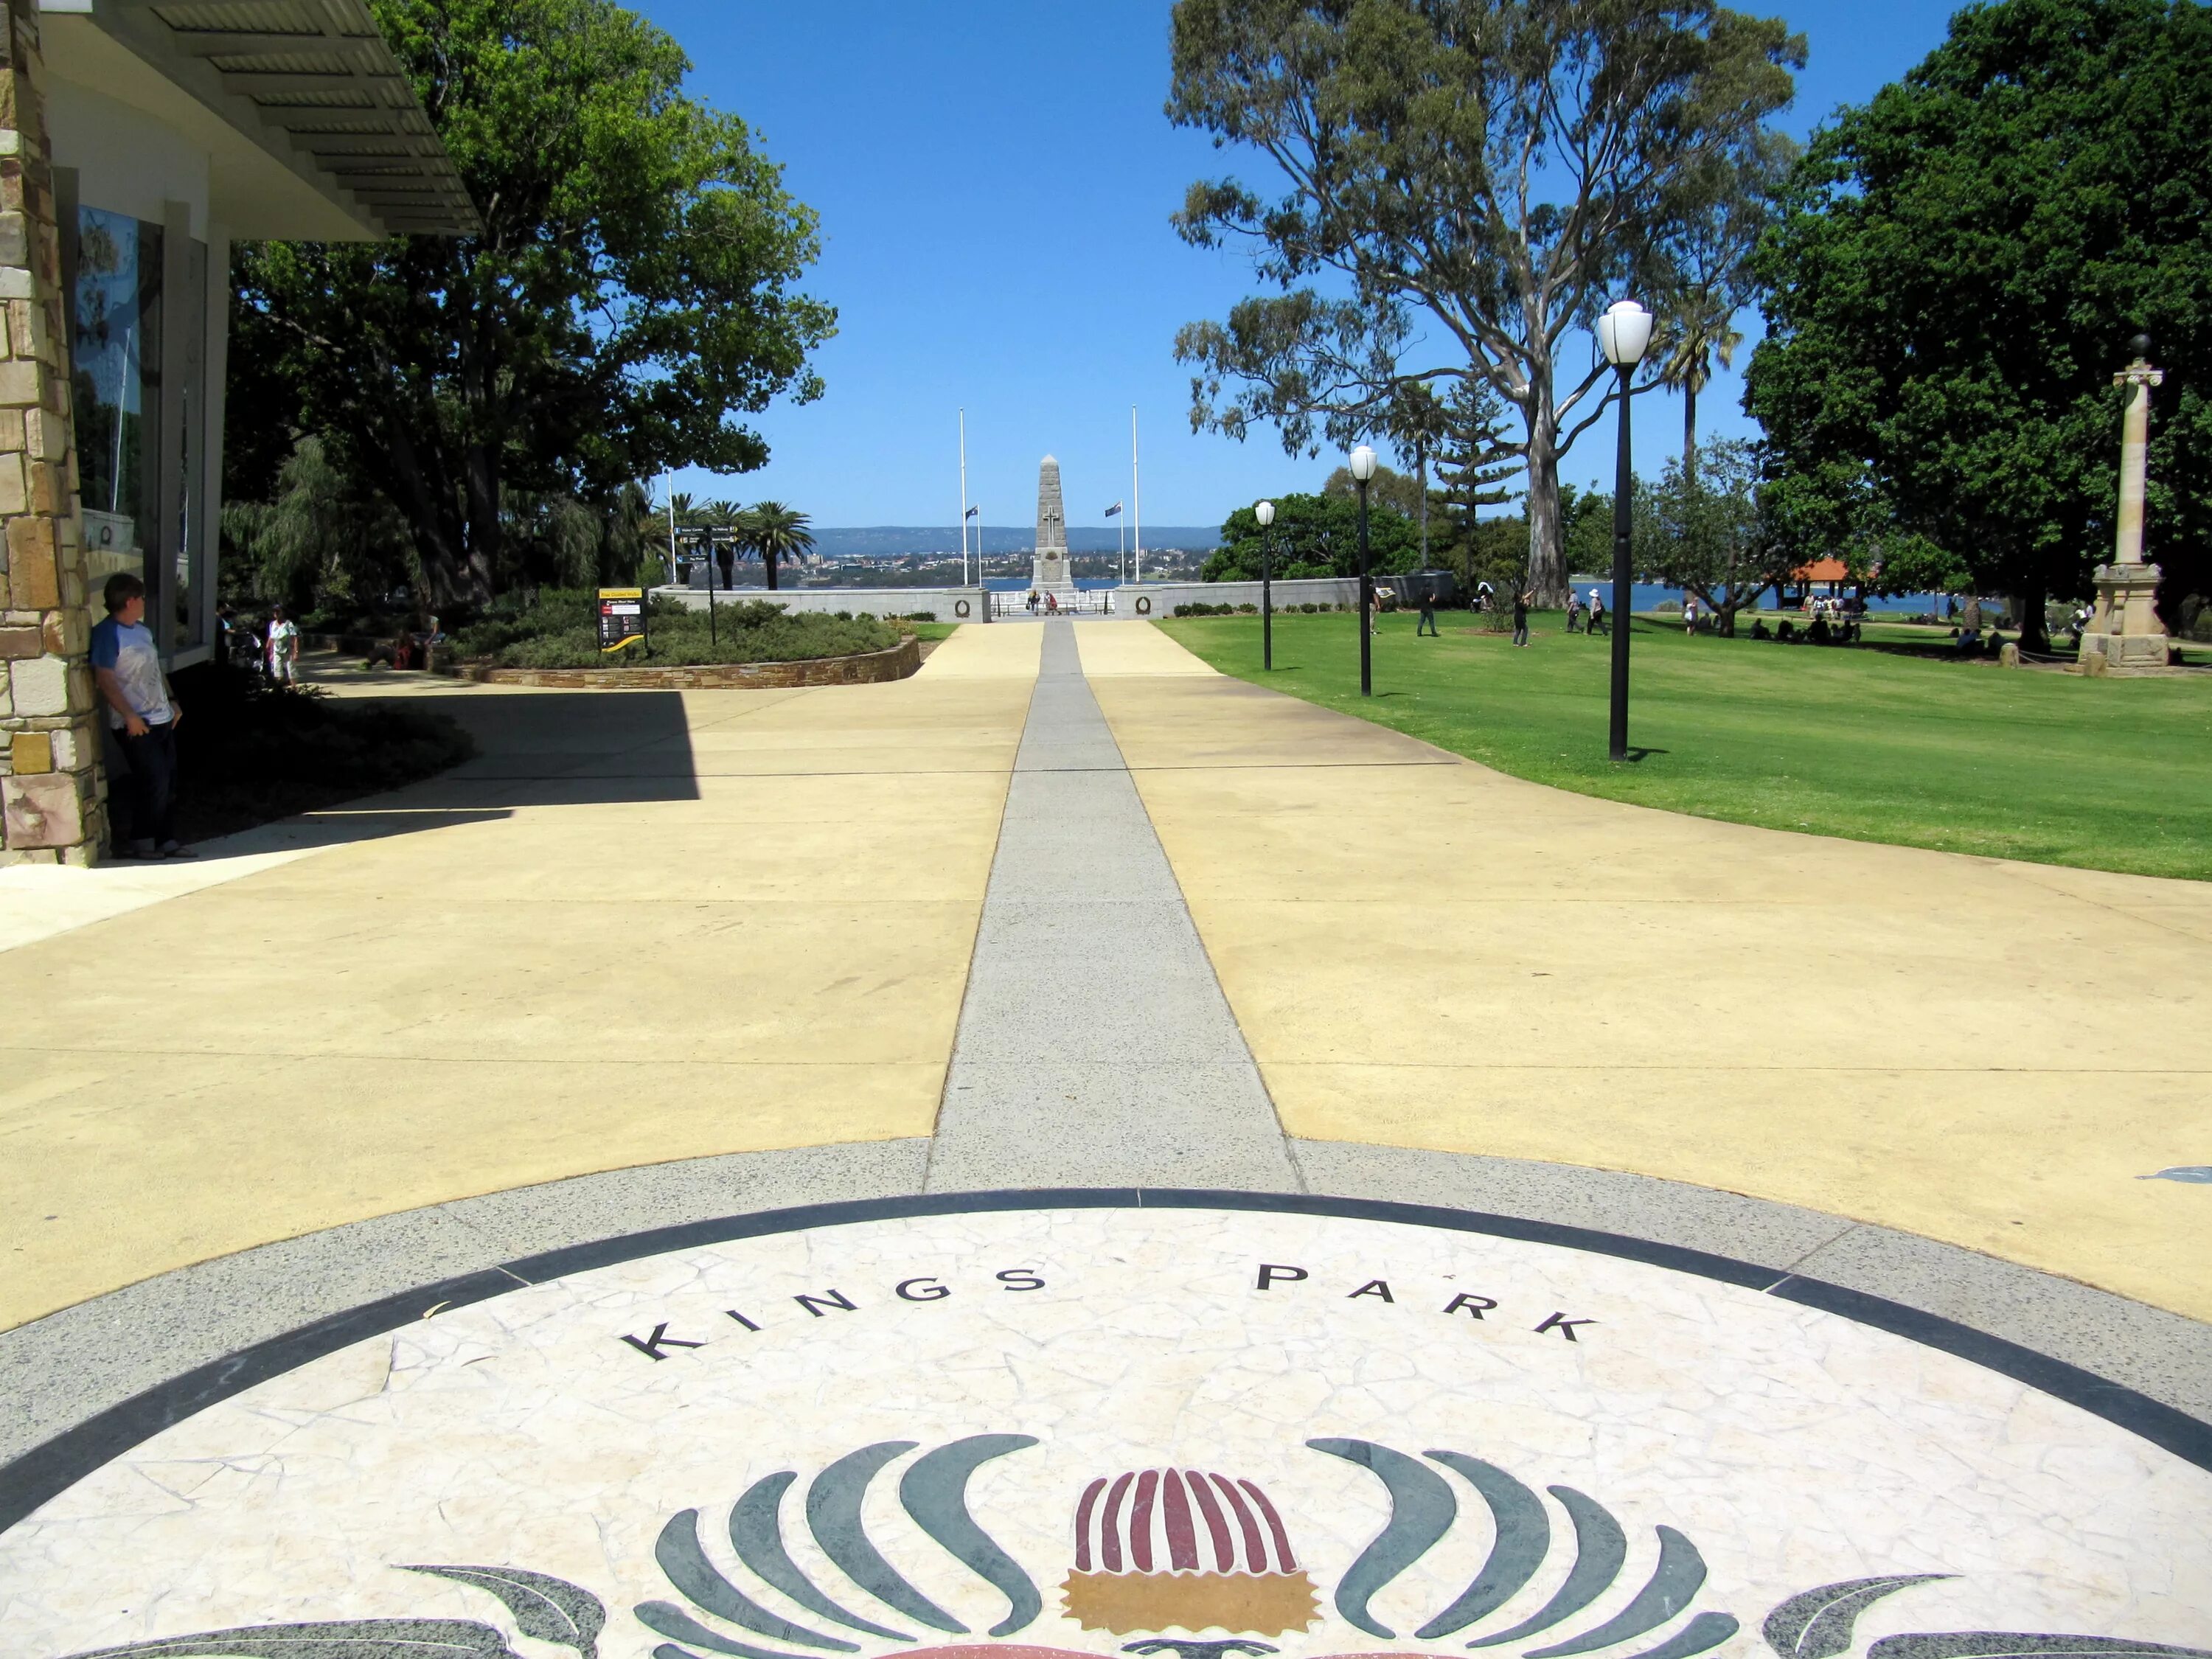 King s park day. Кингс парк Перт. Кингс парк Австралия. Kings Park, Western Australia фото. King's Park Day фото.